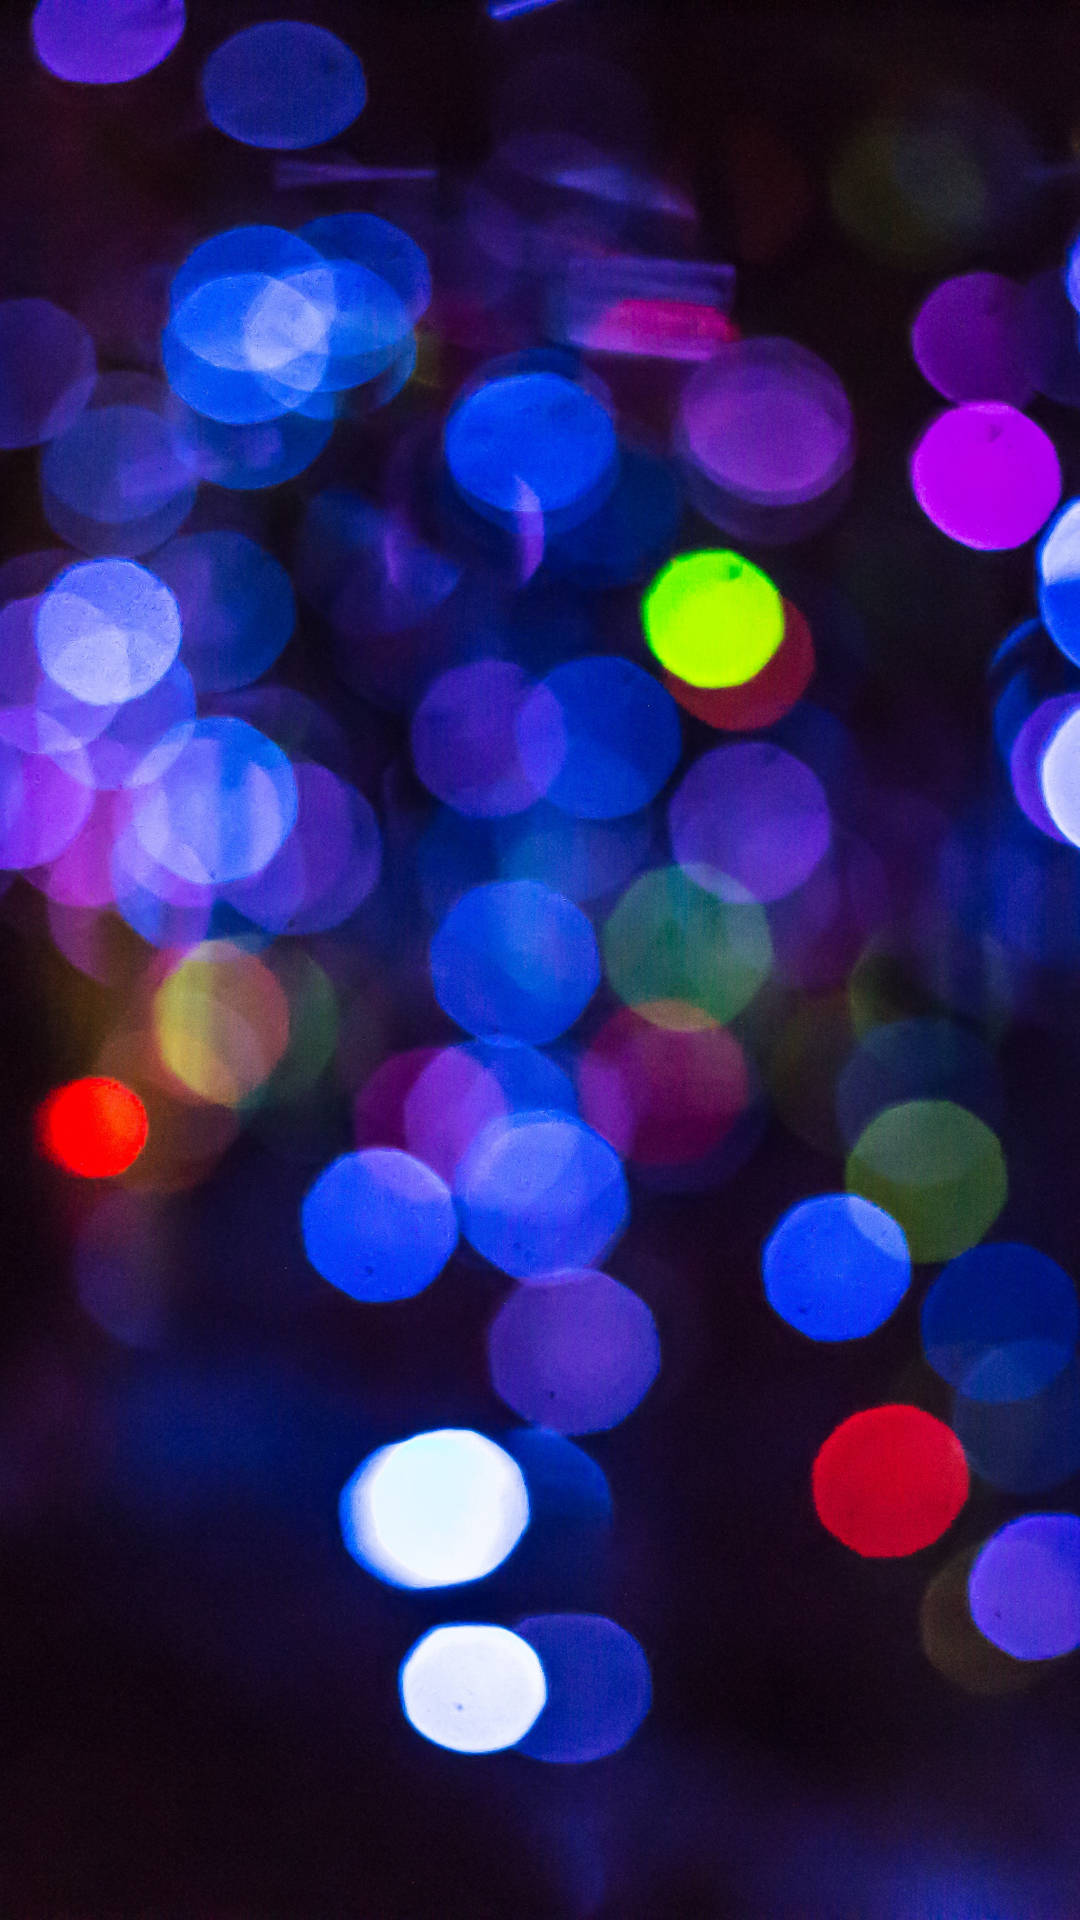 Dslr Blur Cool Neon Lights Background